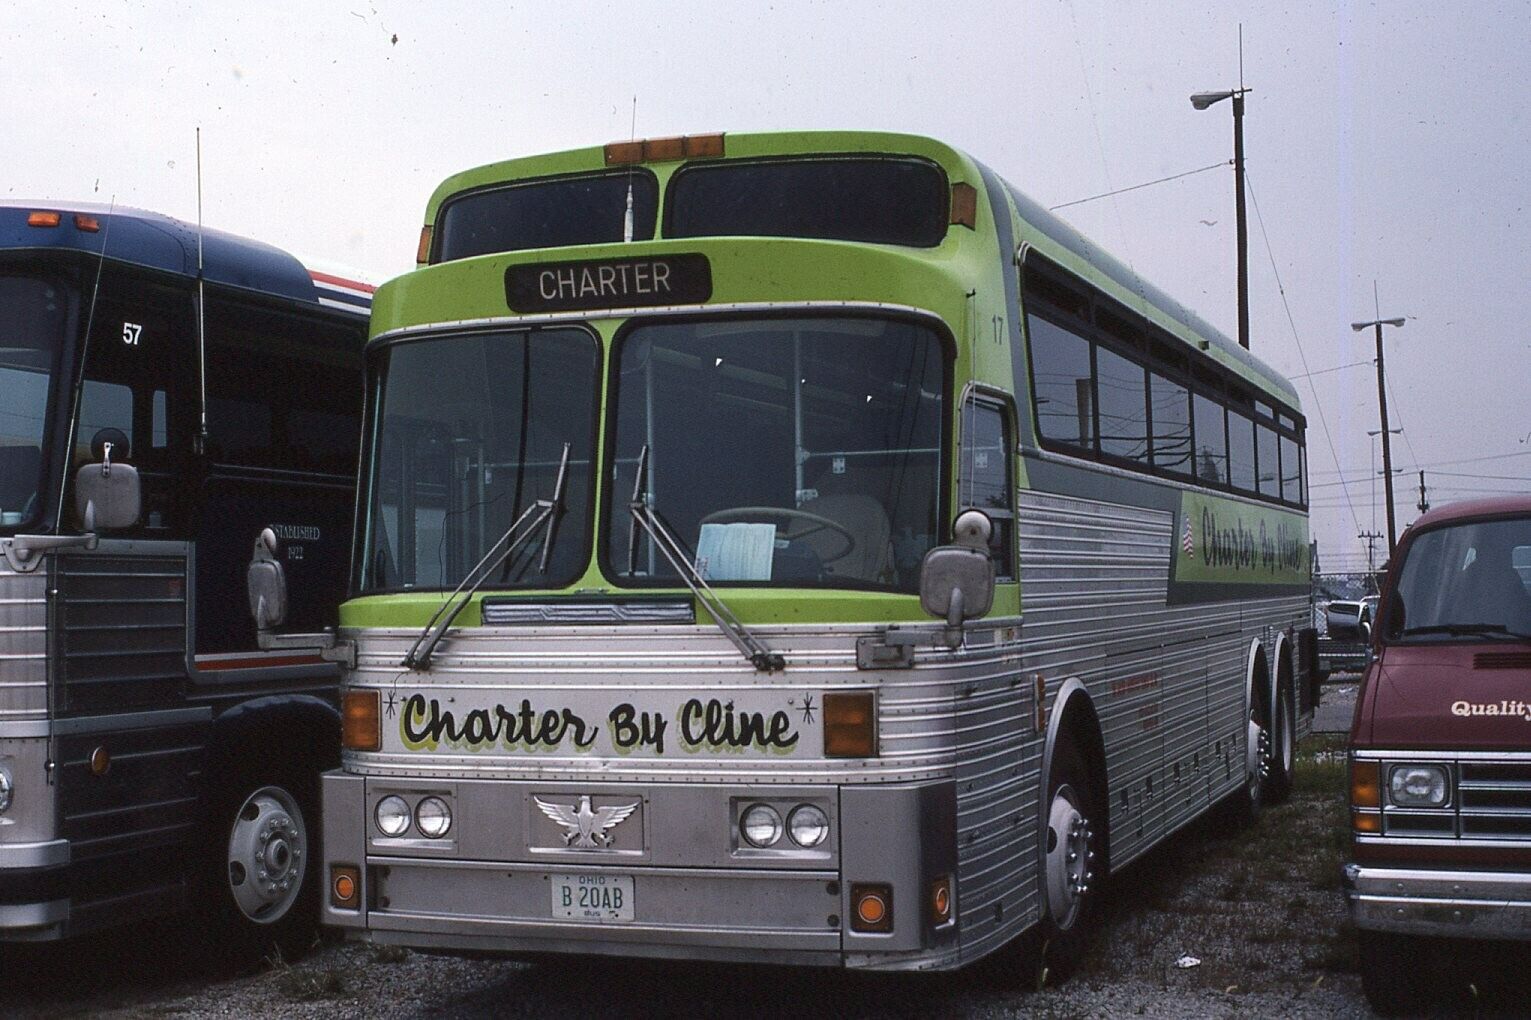 Original Bus Slide Charter by Cline  Silver Eagle Ohio 1986 #02